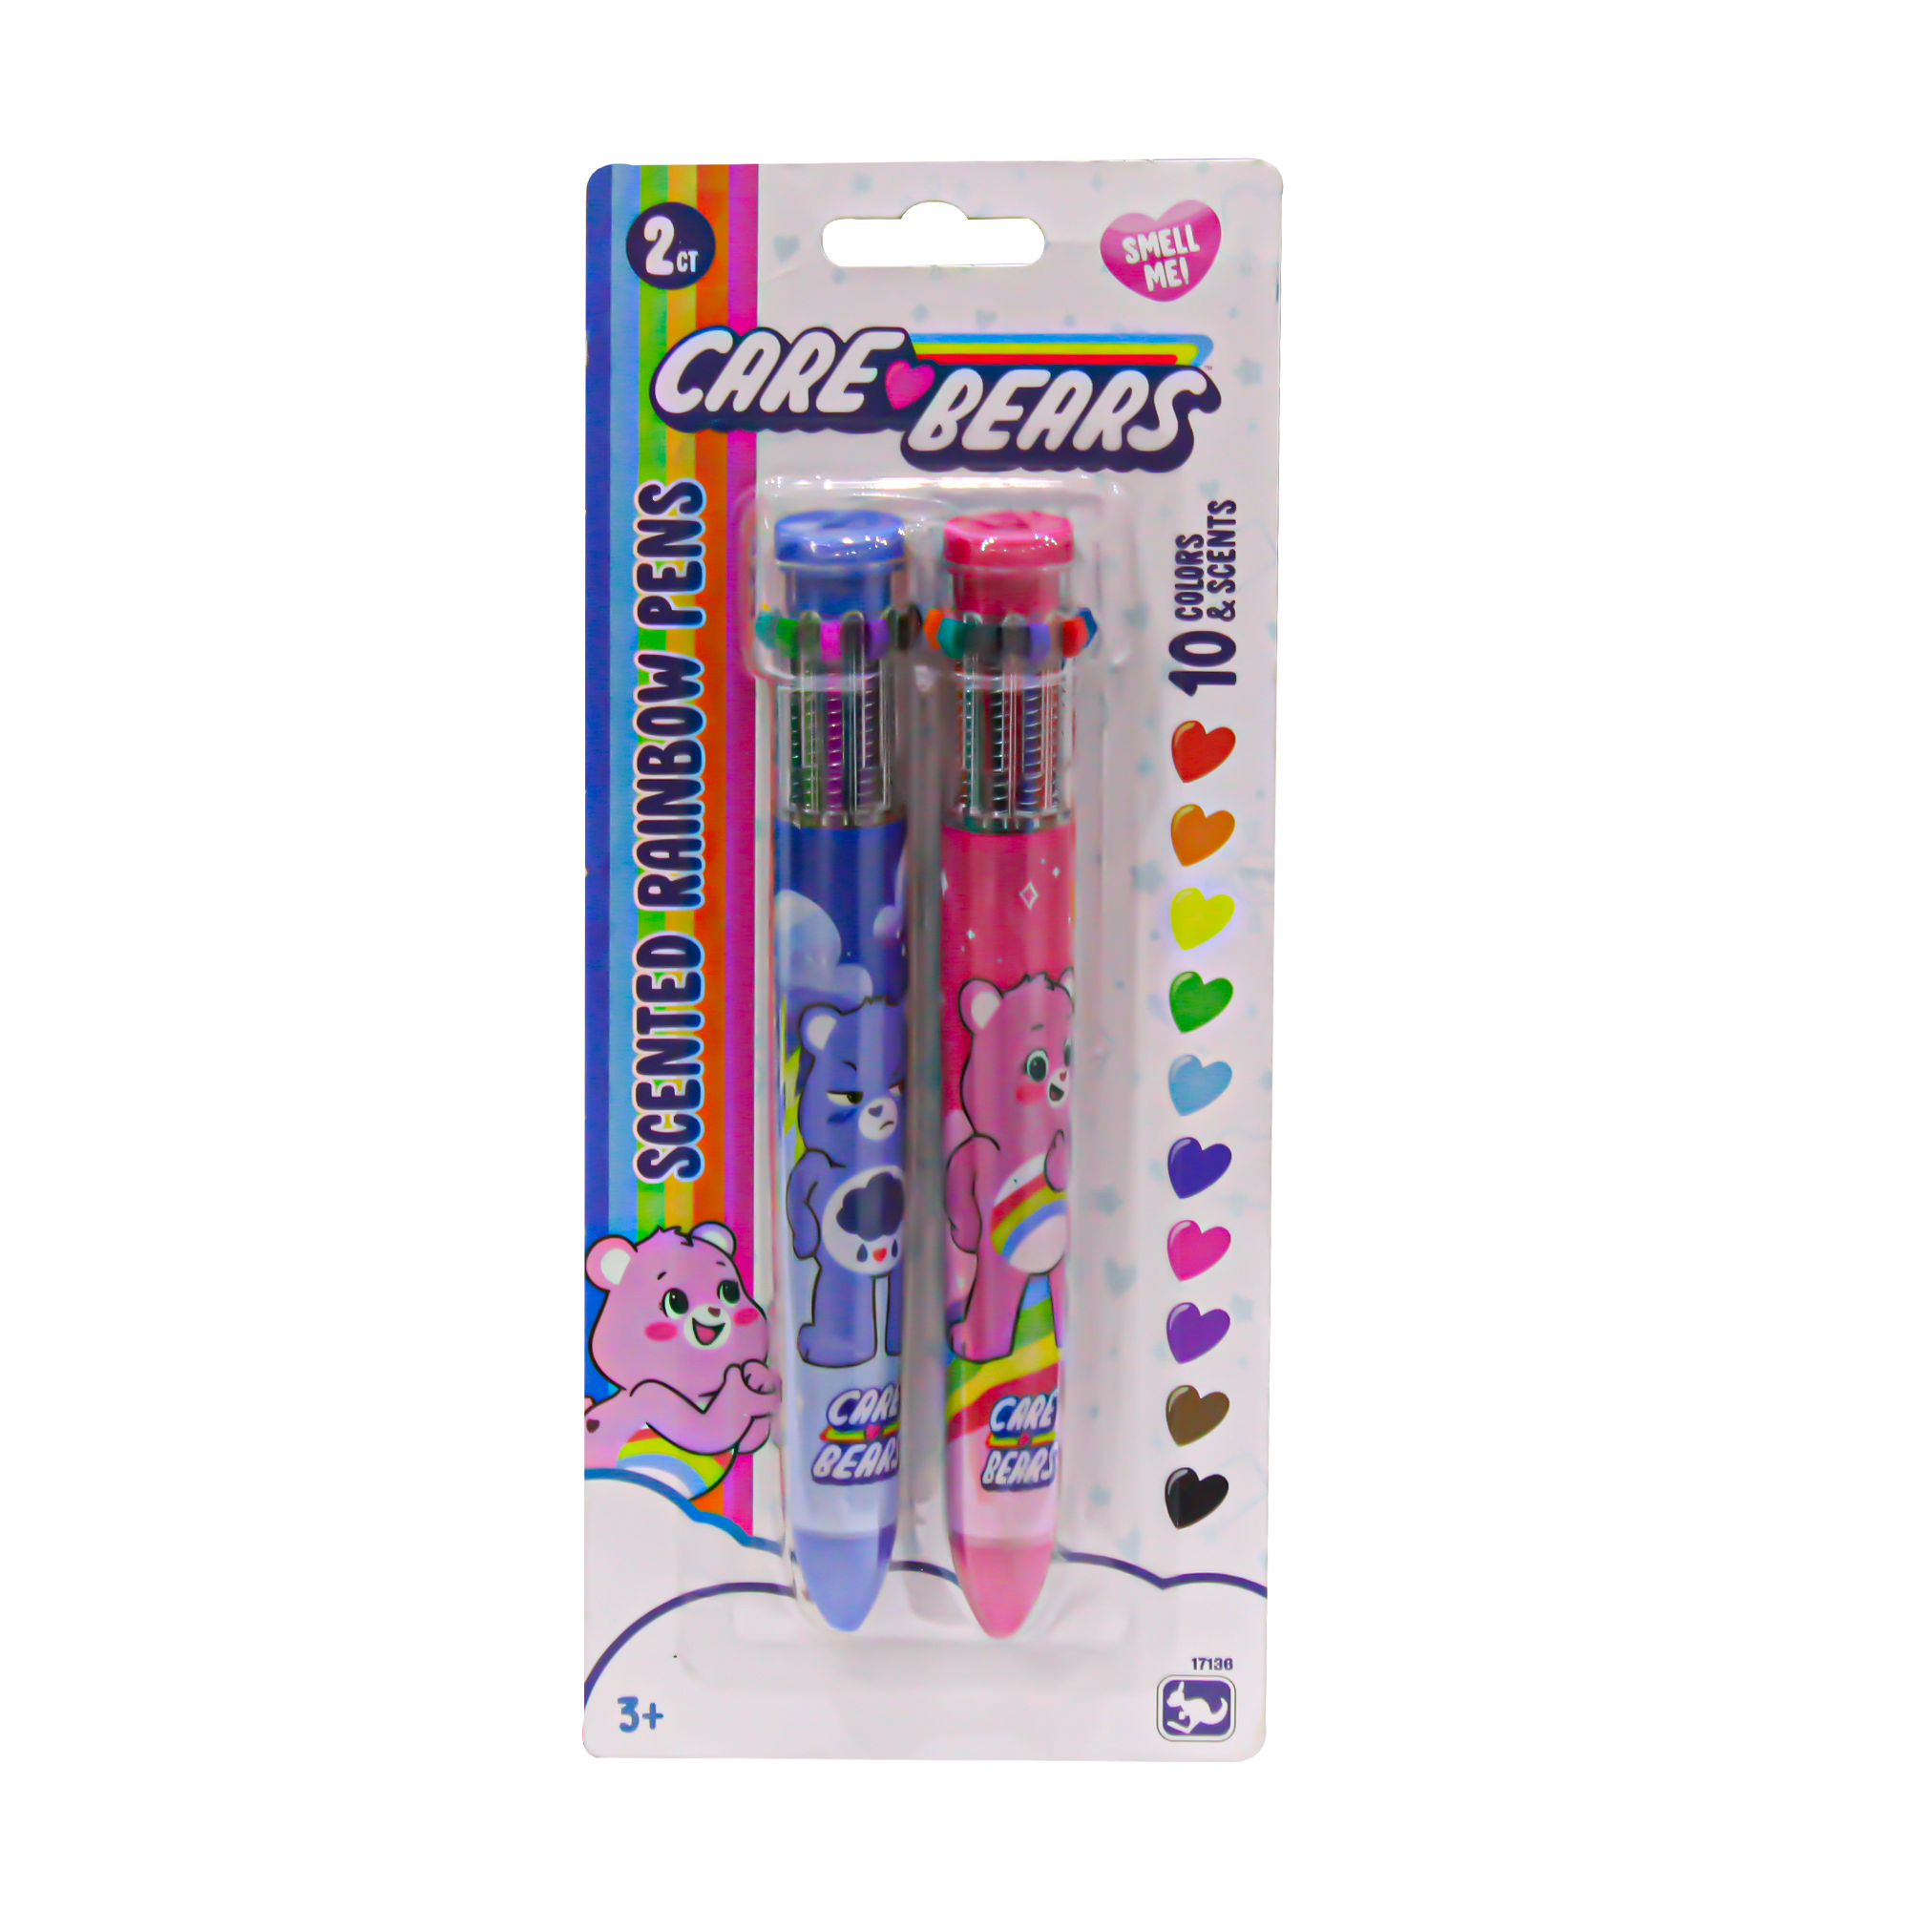 Kangaru Care Bears Scented Rainbow Pens 10 Colors & Scents - 2 Pens